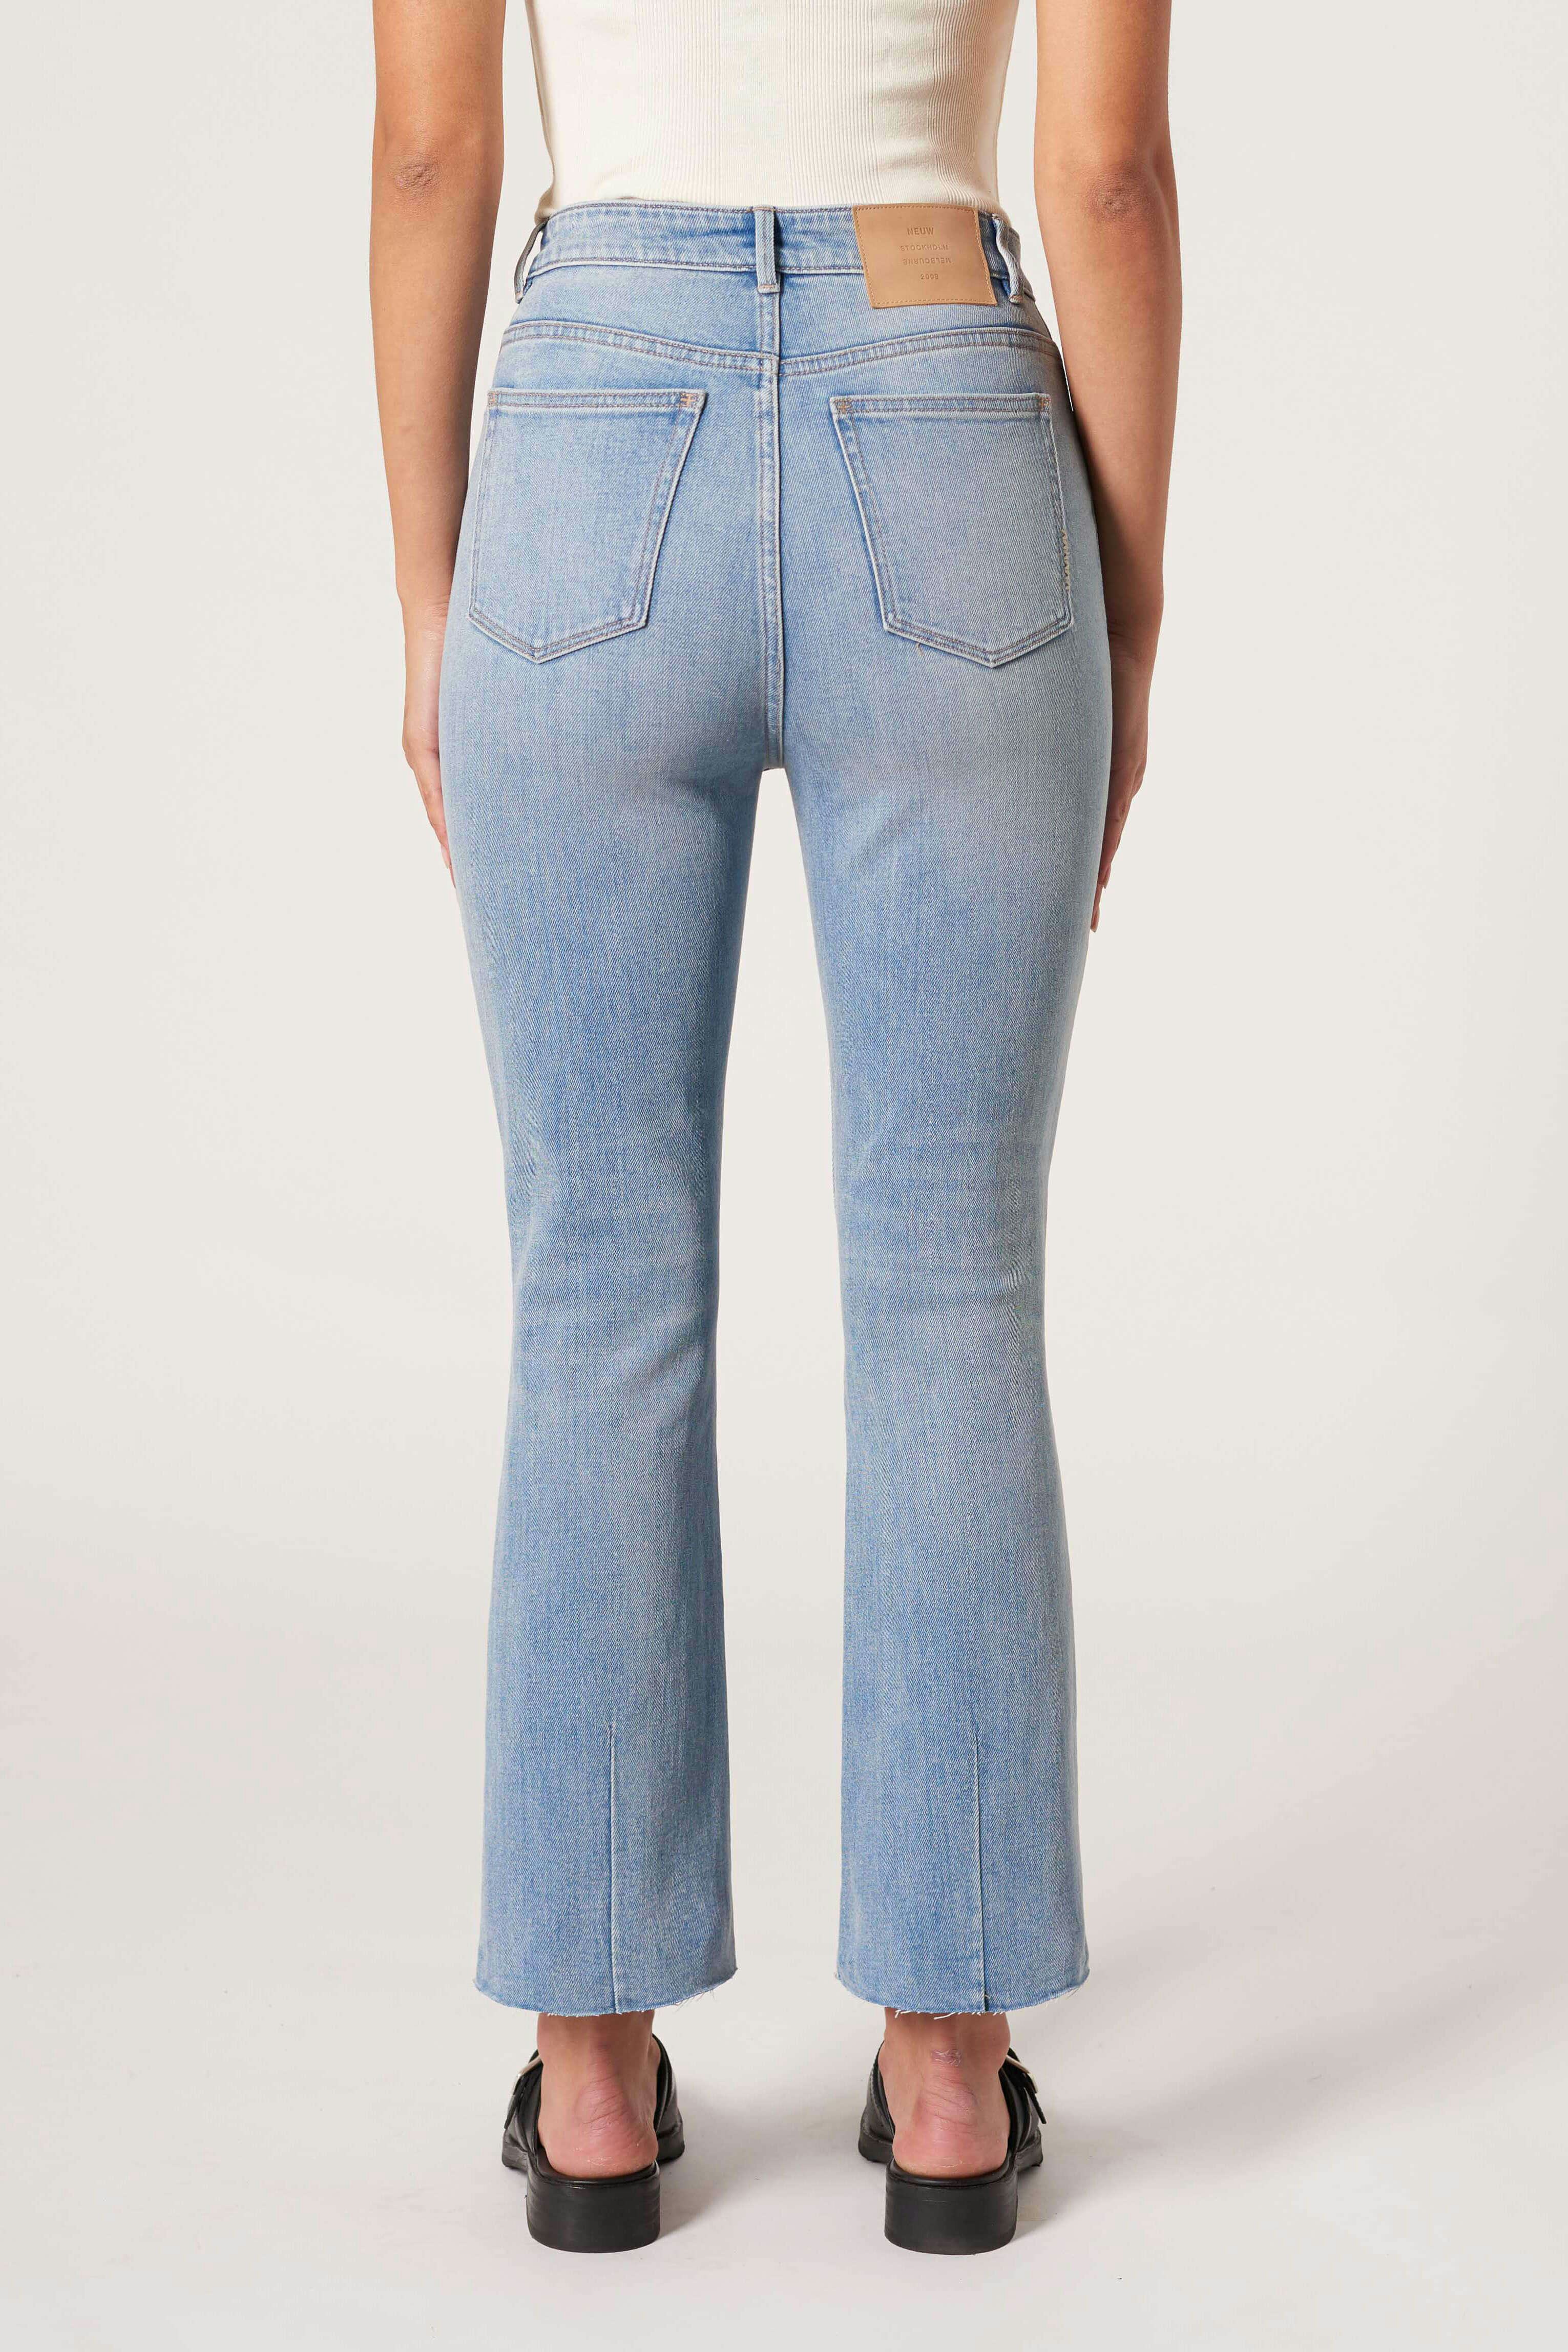 Twiggy Crop Premium Stretch - Sirens Neuw light lightblue womens-jeans 